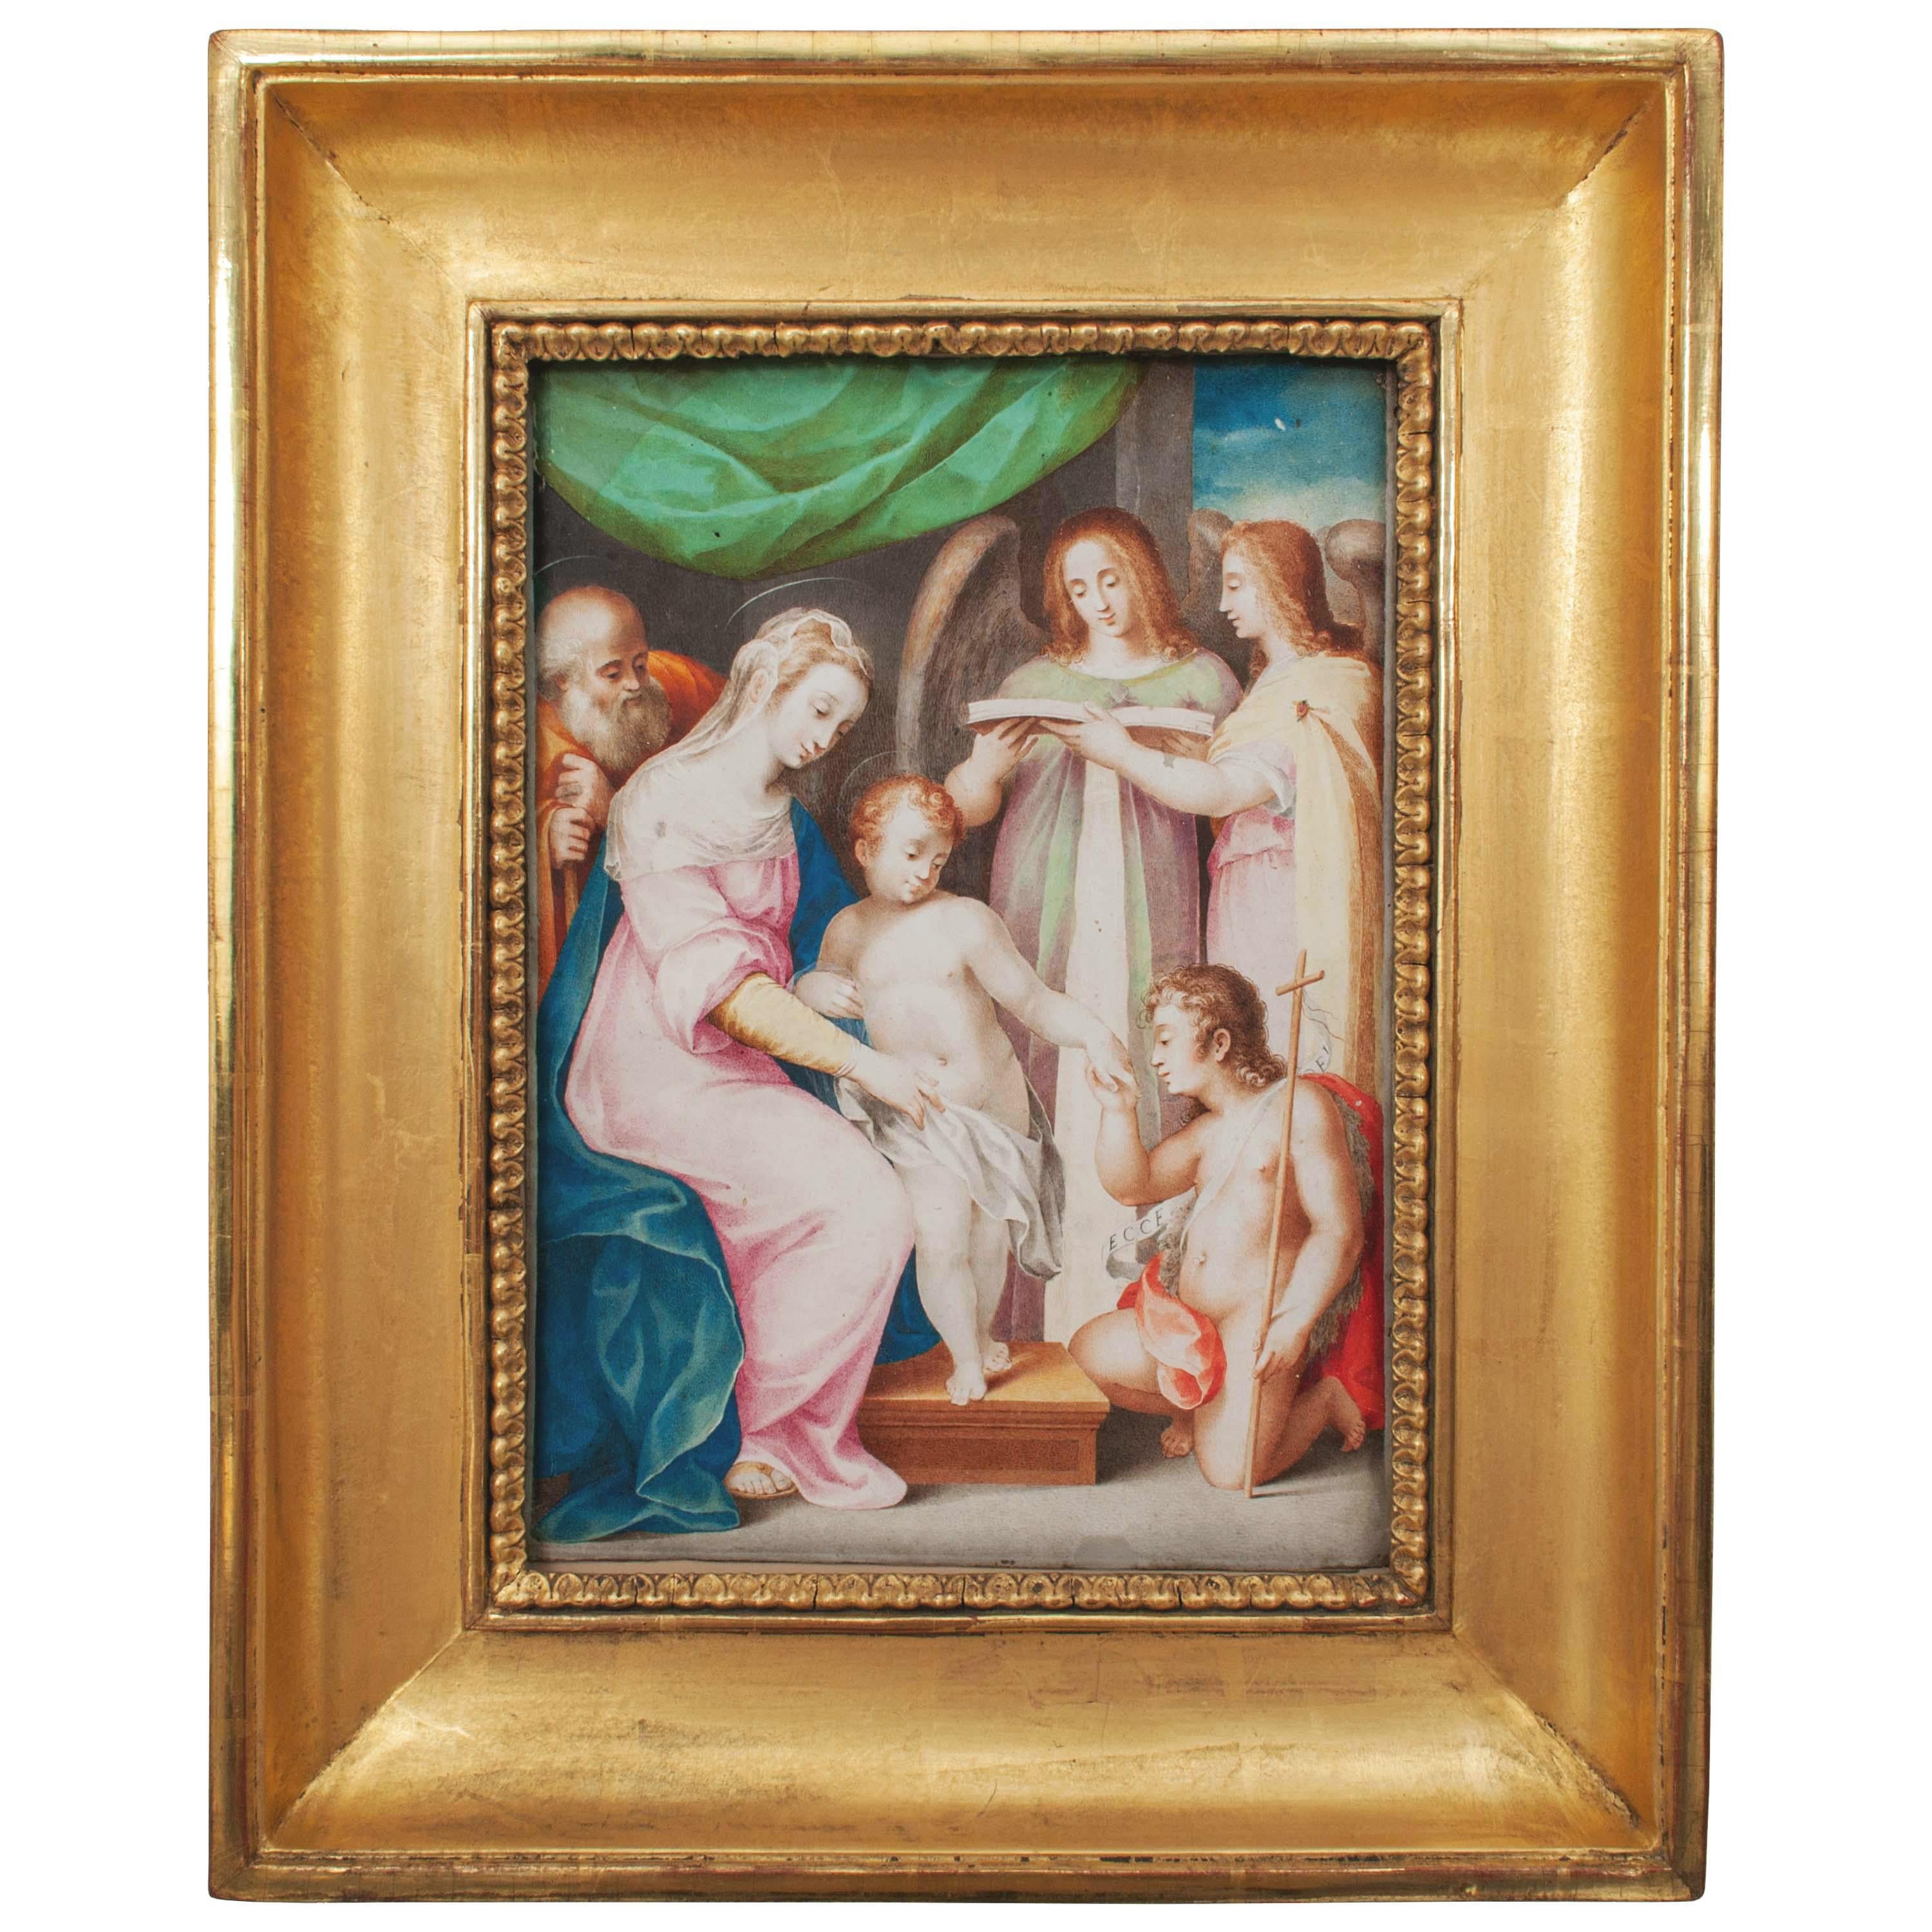 GIUSEPPE CESARI IL CAVALIER D'ARPINO Figurative Painting - Italian Renaissance Tempera on Parchment Painting Holy Family by Giuseppe Cesari